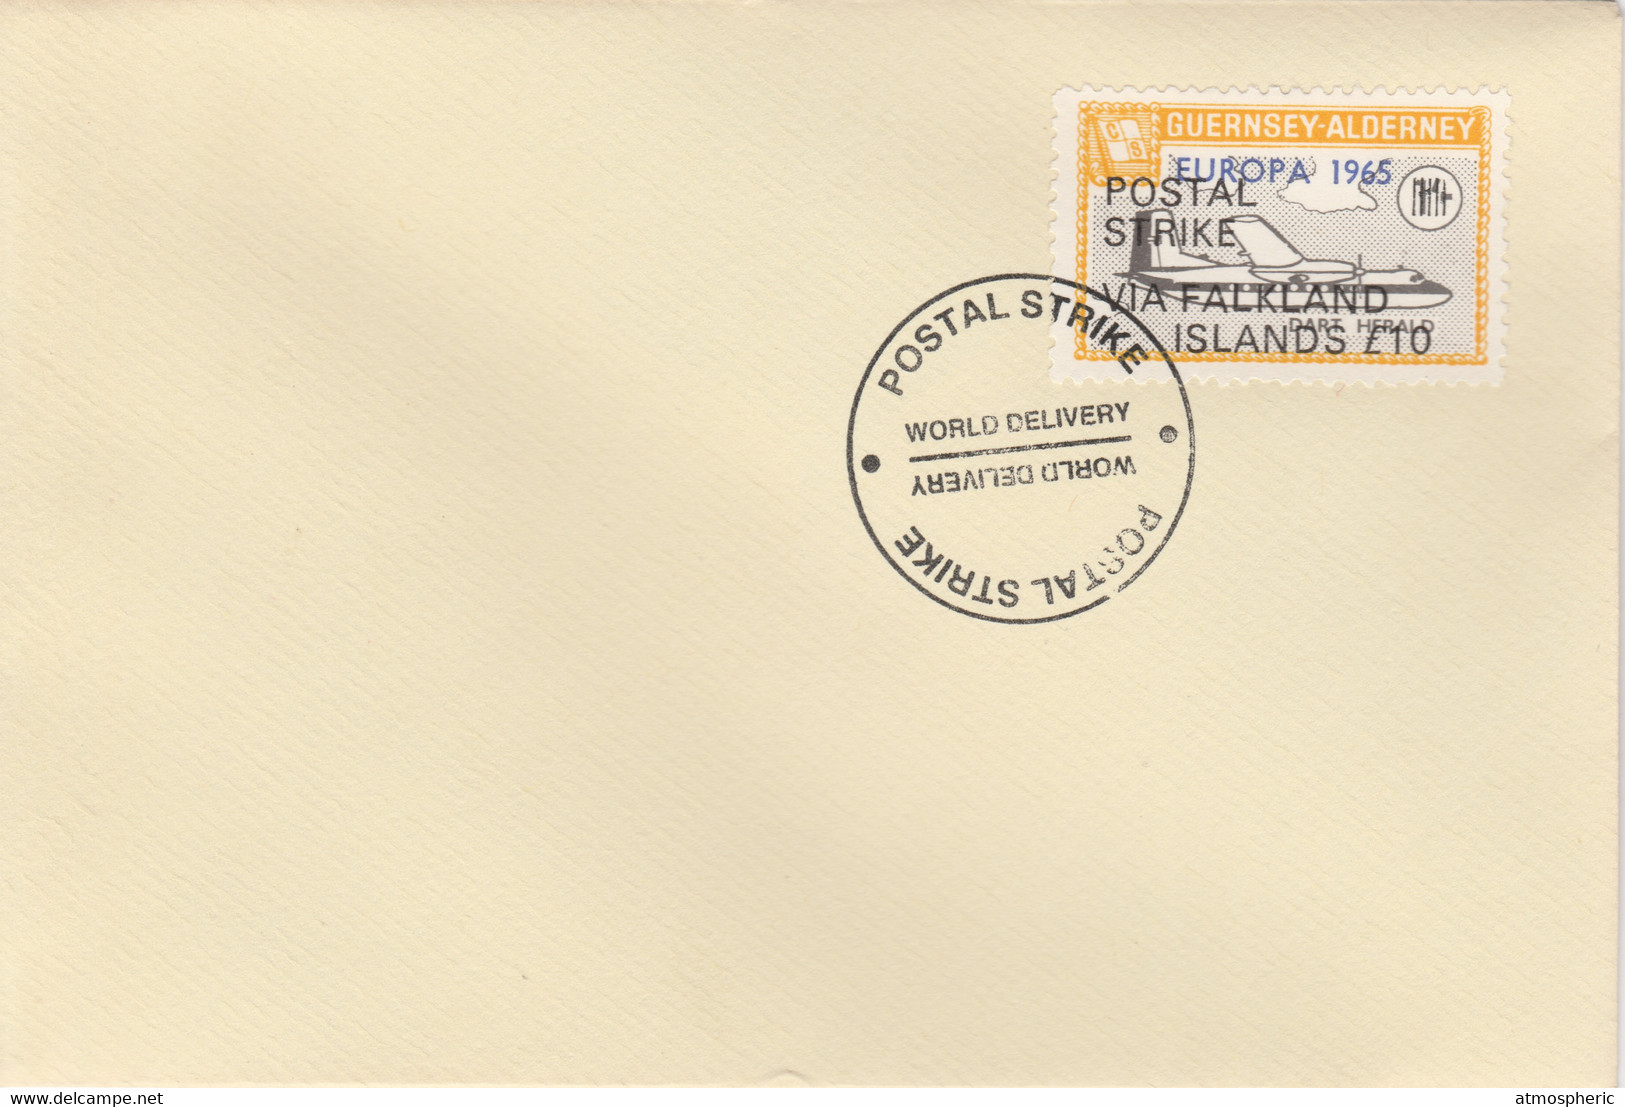 Guernsey - Alderney 1971 Postal Strike Cover To Falkland Islands Bearing Dart Herald 1s Overprinted Europa 1965 Postmark - Non Classés